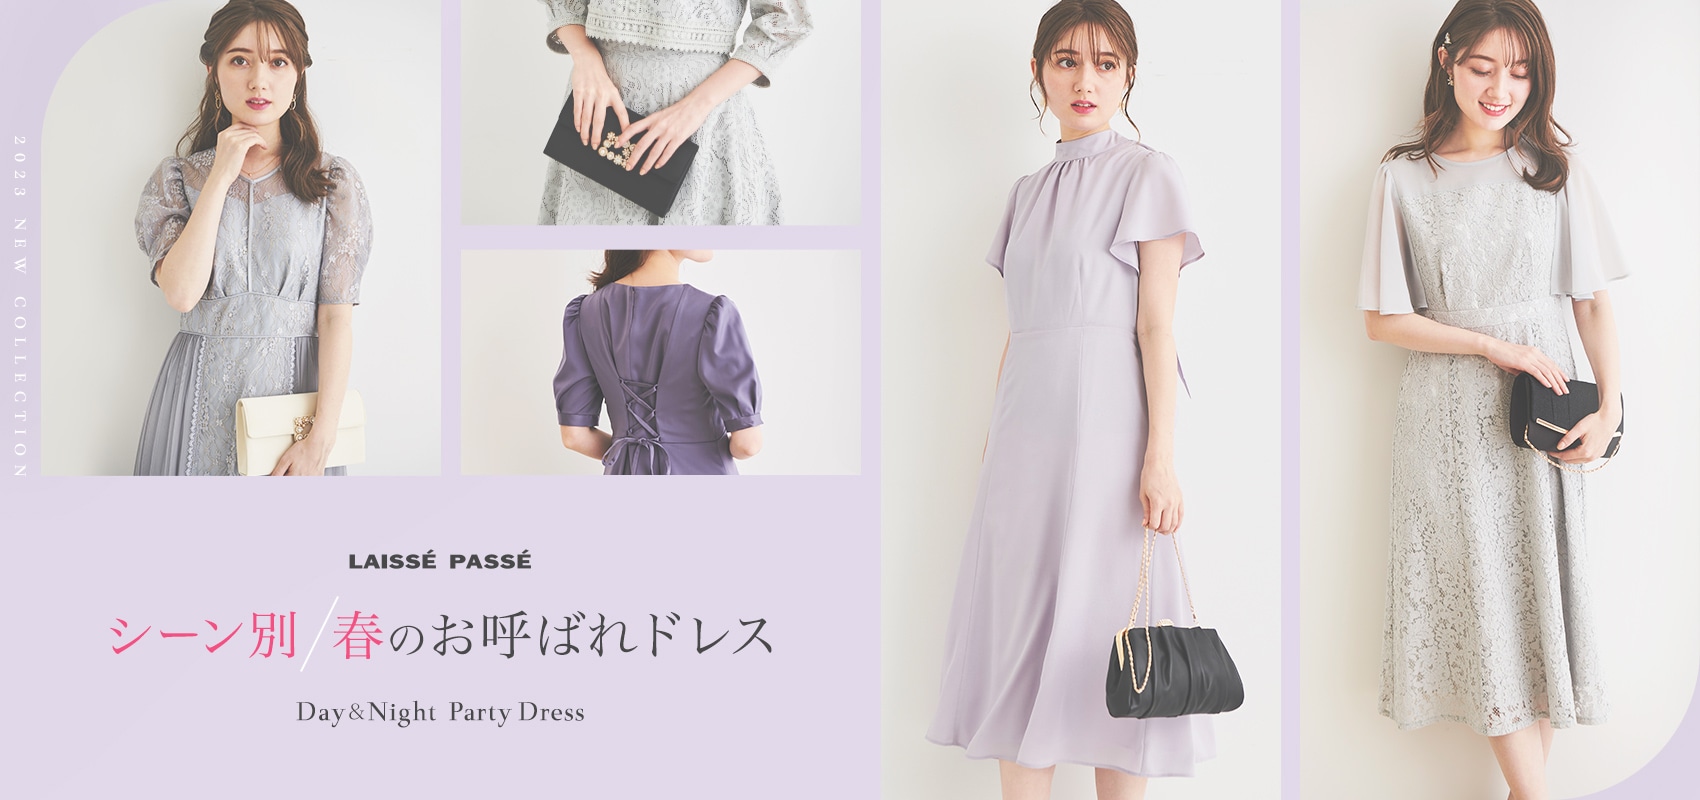 LAISSE PASSE -Day&Night Party Dress- シーン別 春のお呼ばれドレス